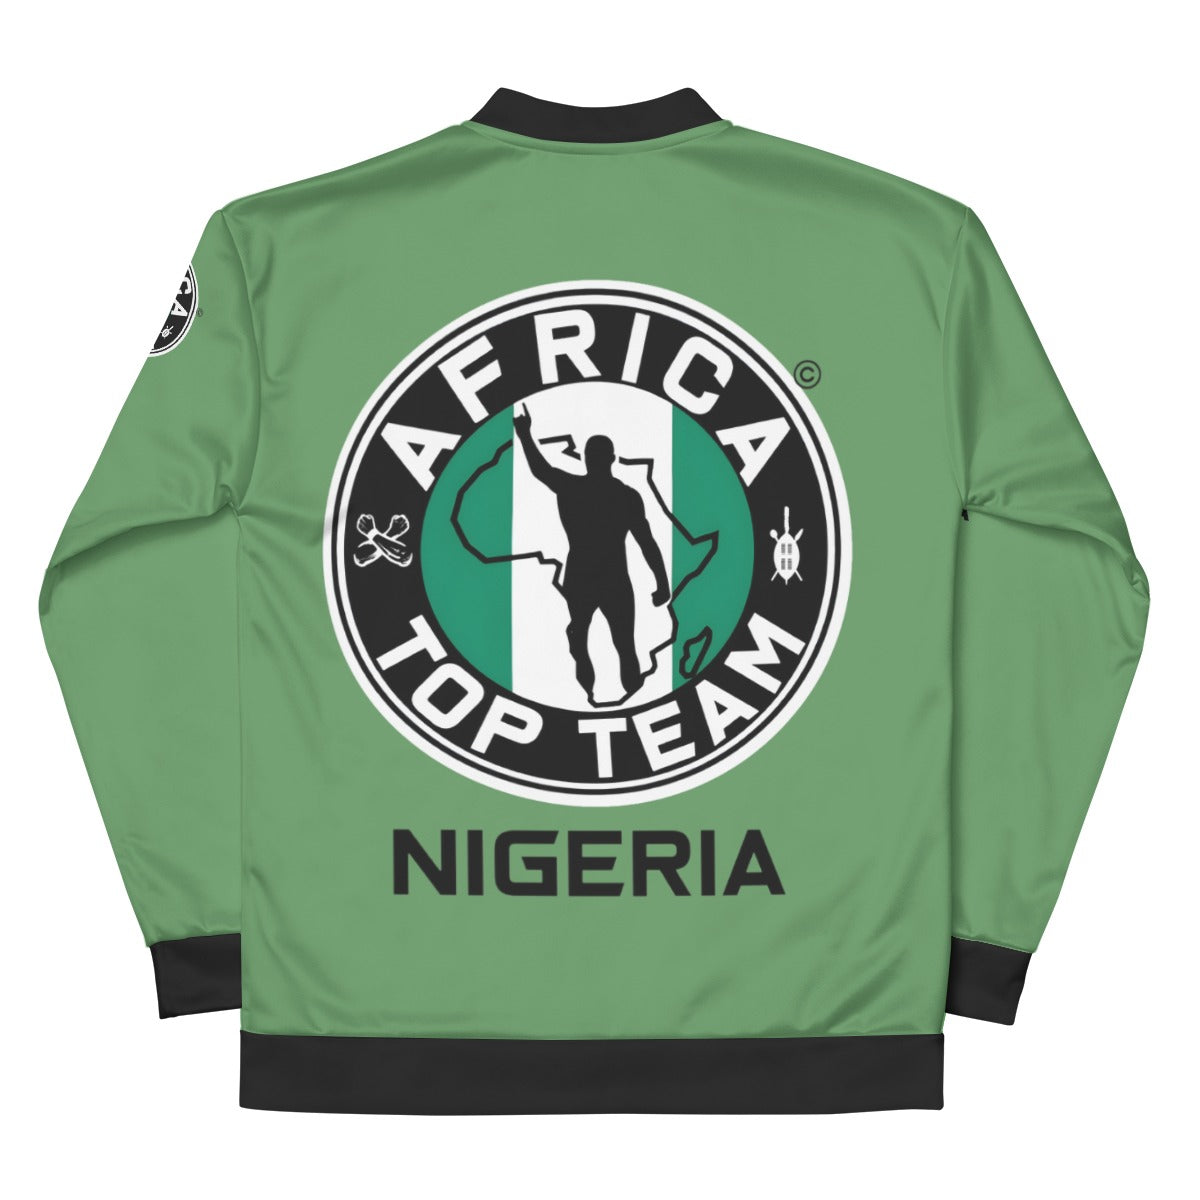 Africa Top Team Nigeria Drab Green Bomber Jacket